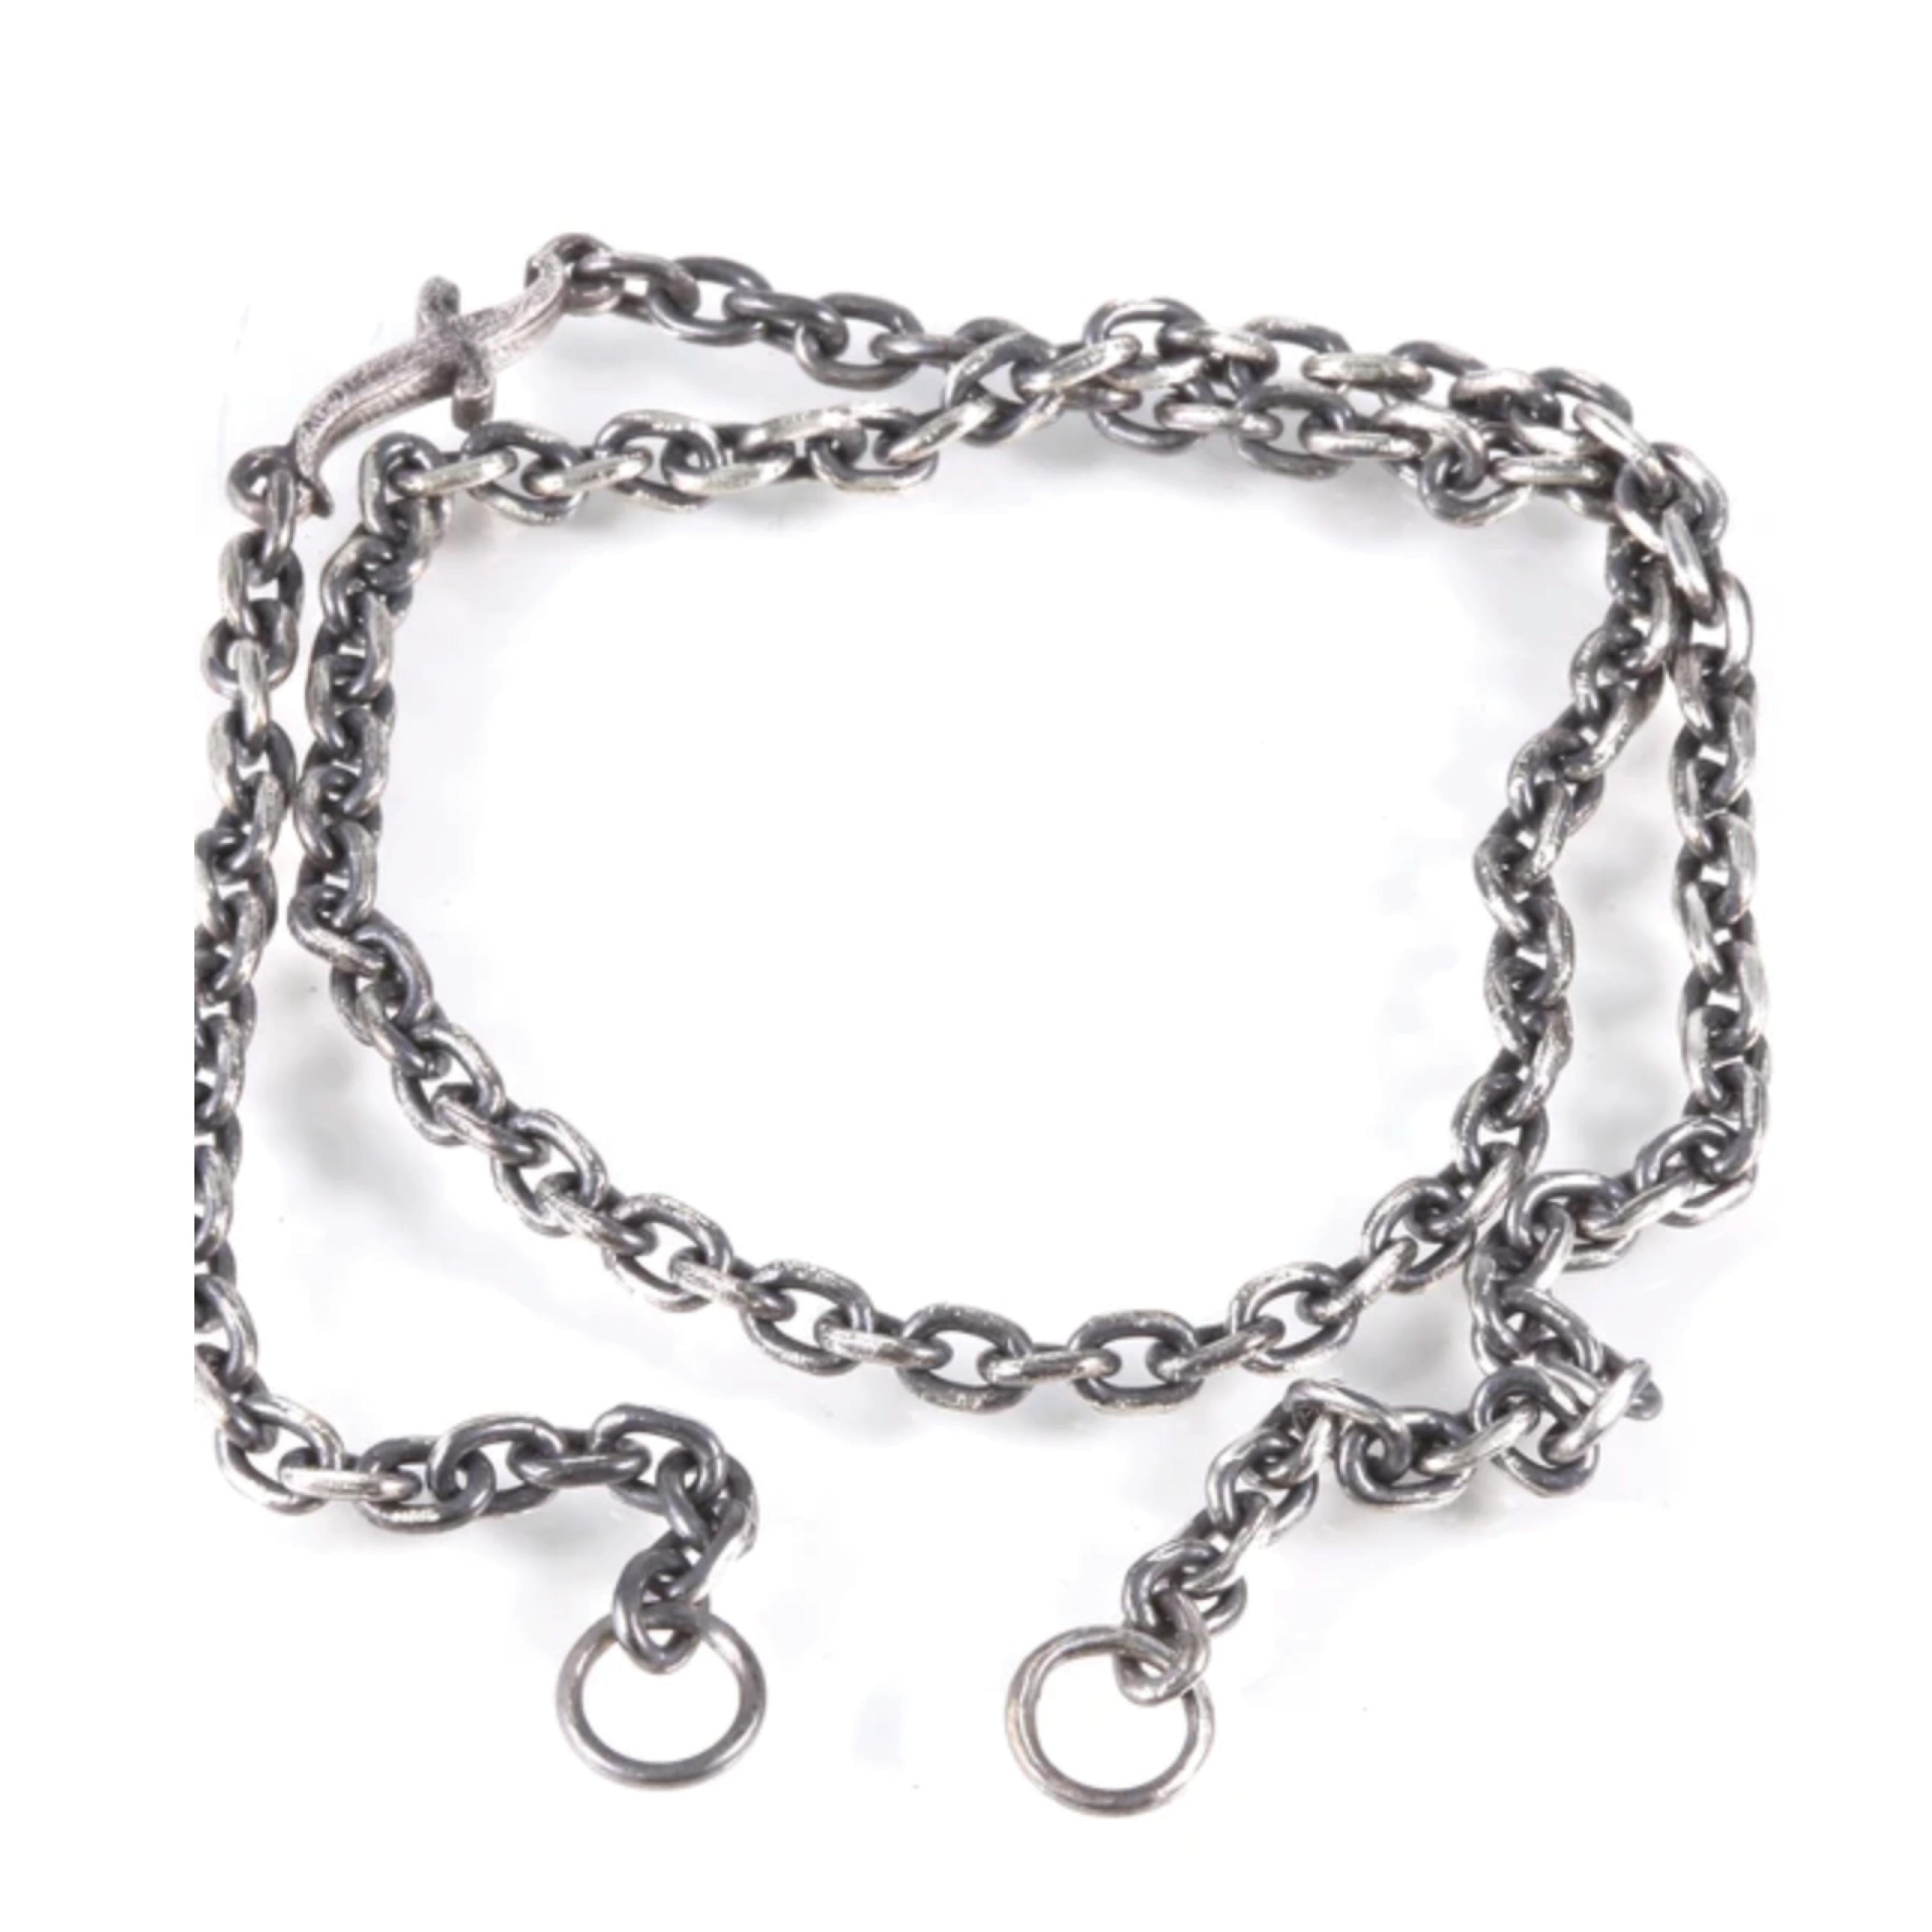 1472 silver chain